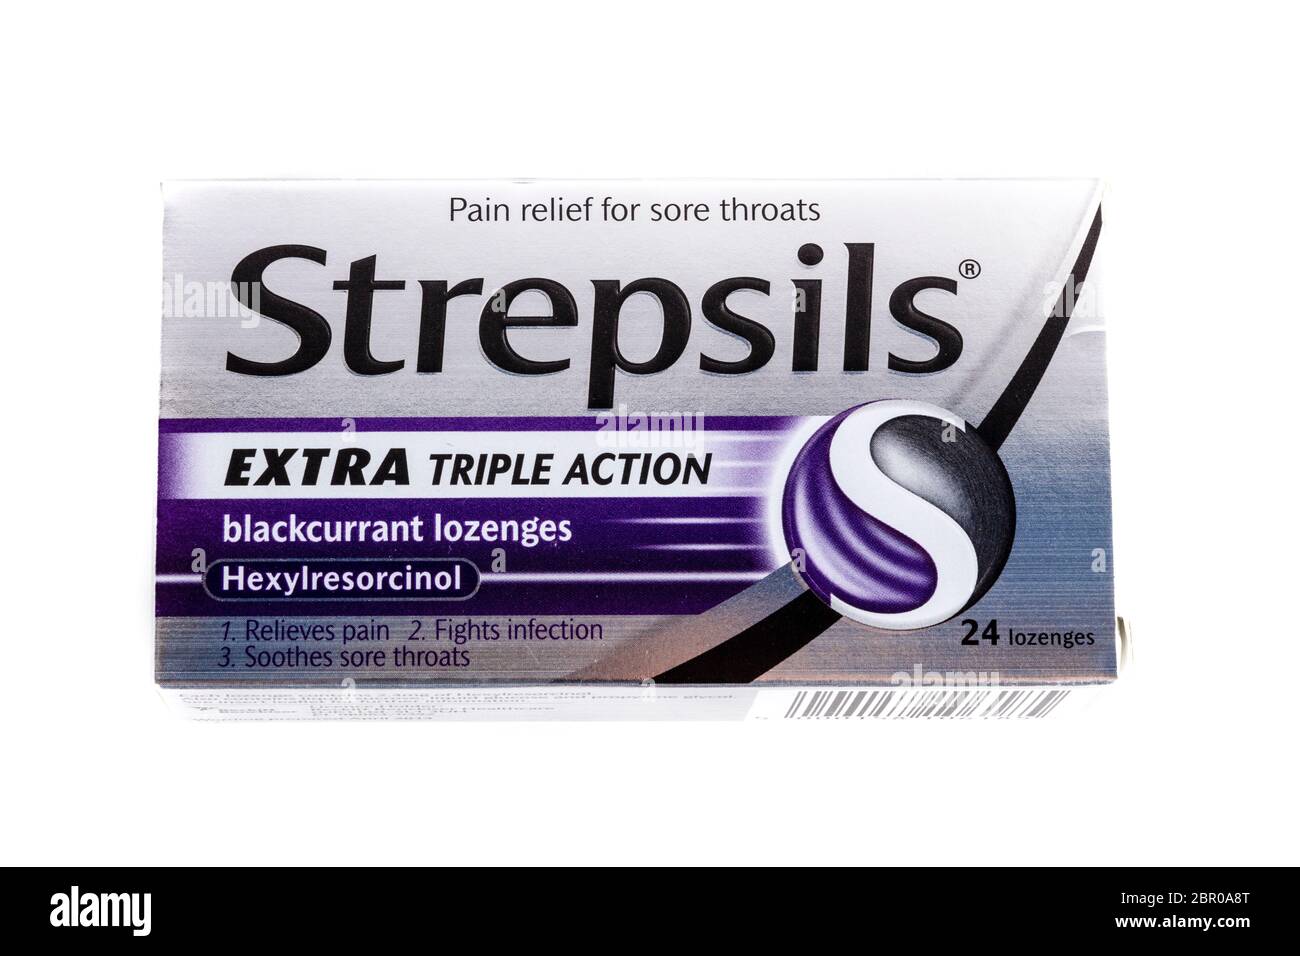 Strepsils, Strepsils lozenges, Strepsils sore throat relief, Strepsils triple action, Hexylresorcinol, pain relief, sore throat pain relief, box, pack Stock Photo